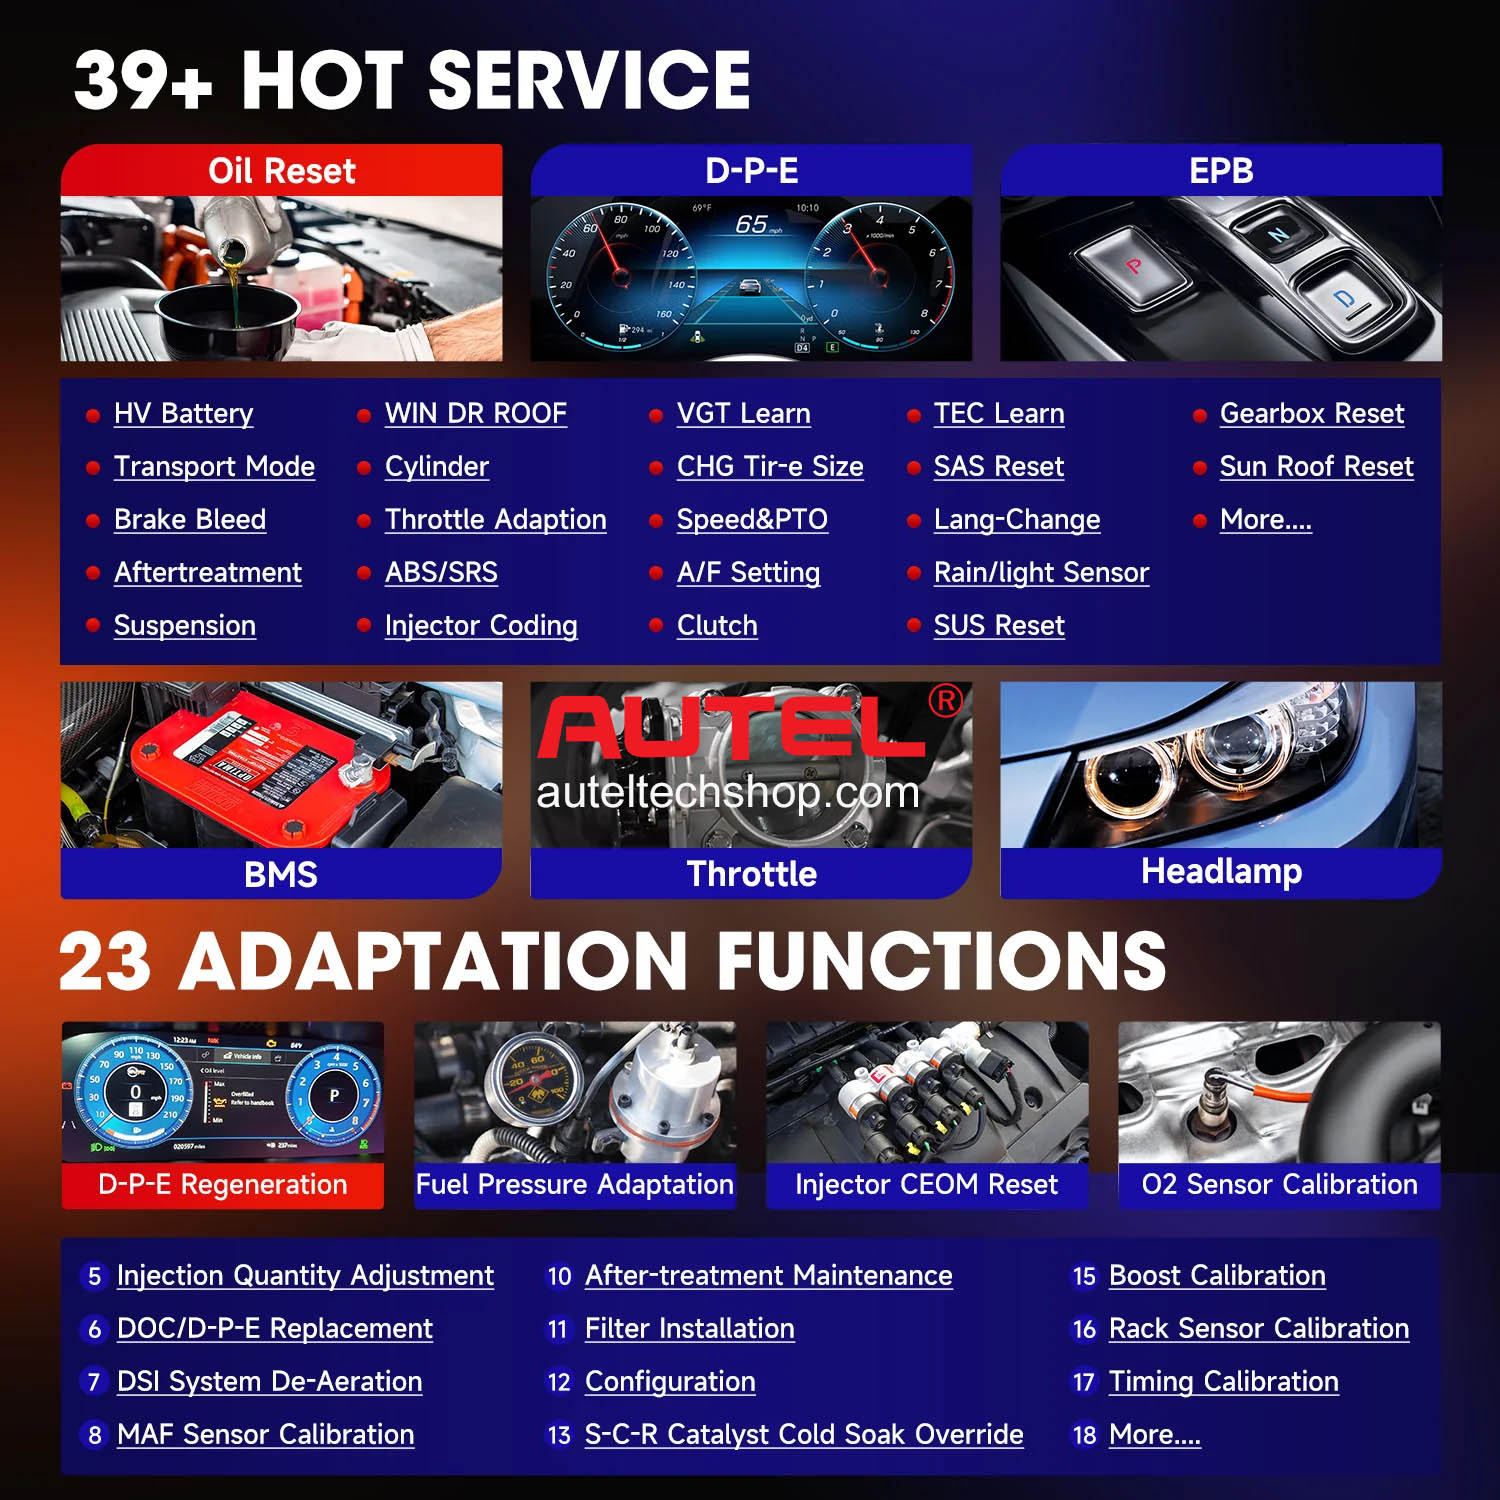 MS908CV II 39+ Hot Service & 23 Adaptation Functions